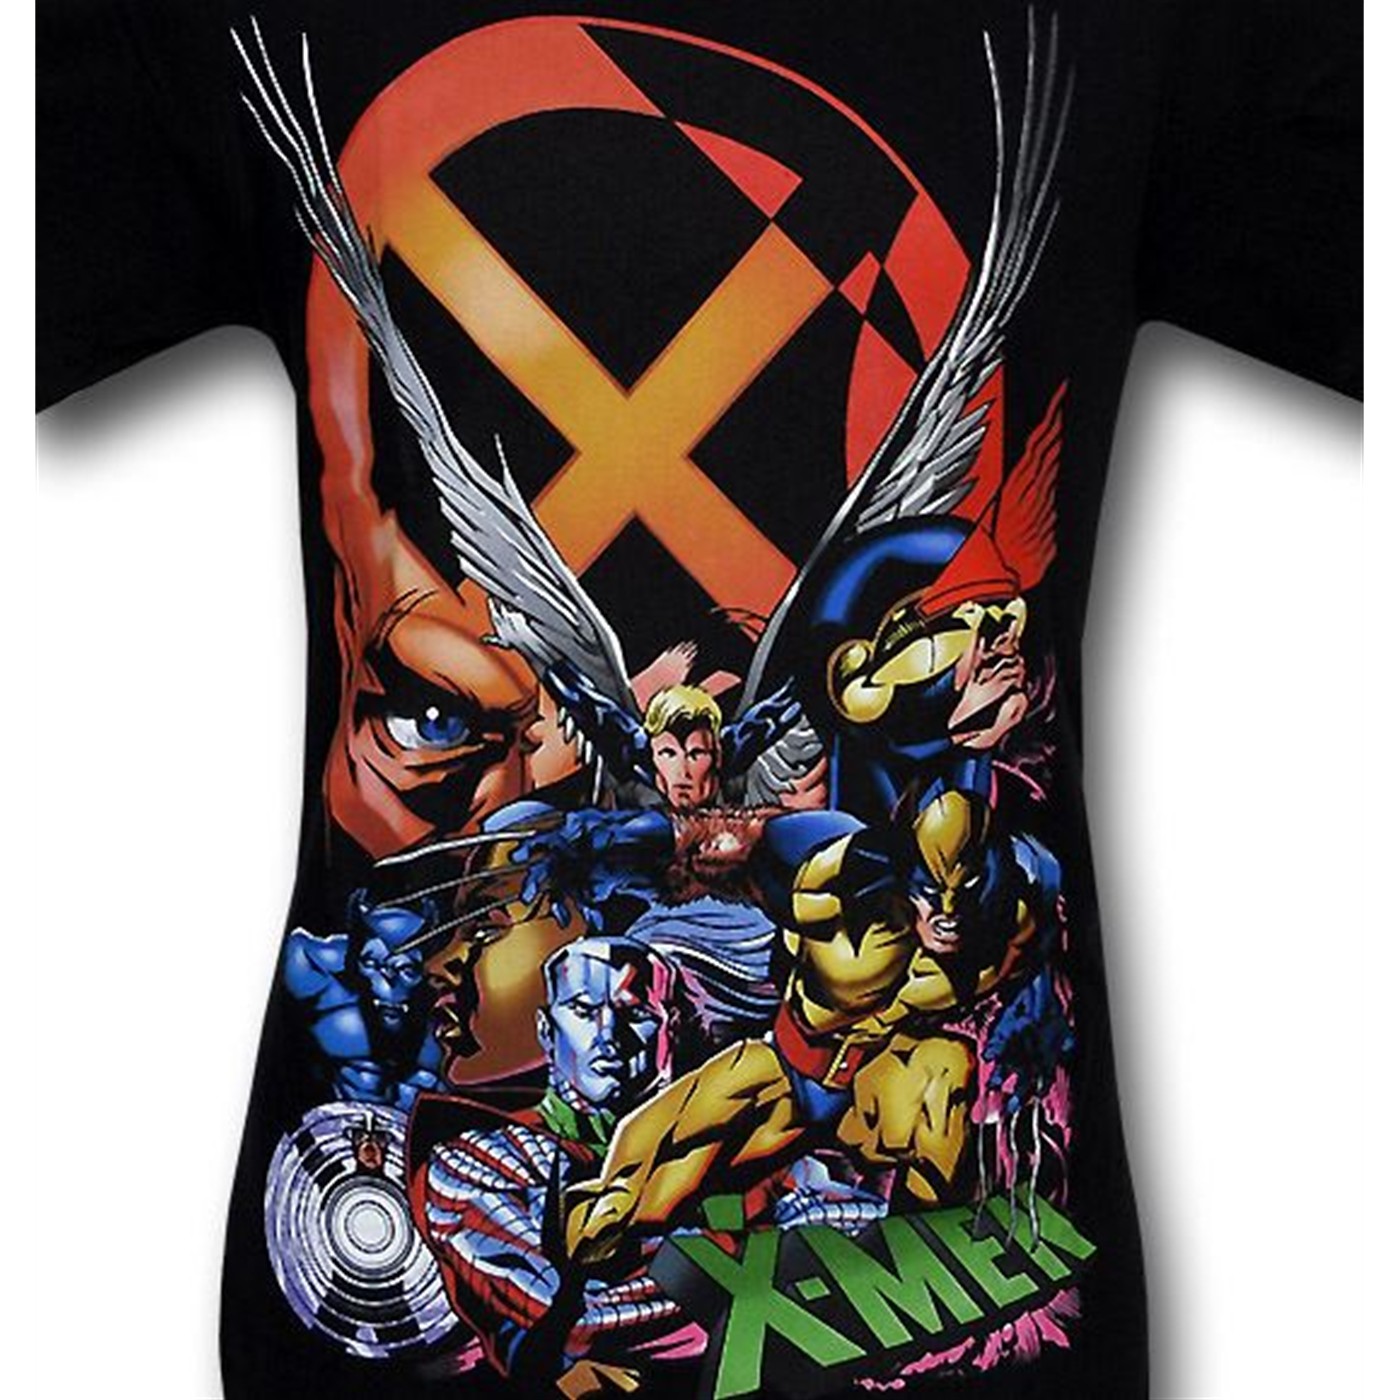 X-Men Team Xavier 30 Single T-Shirt